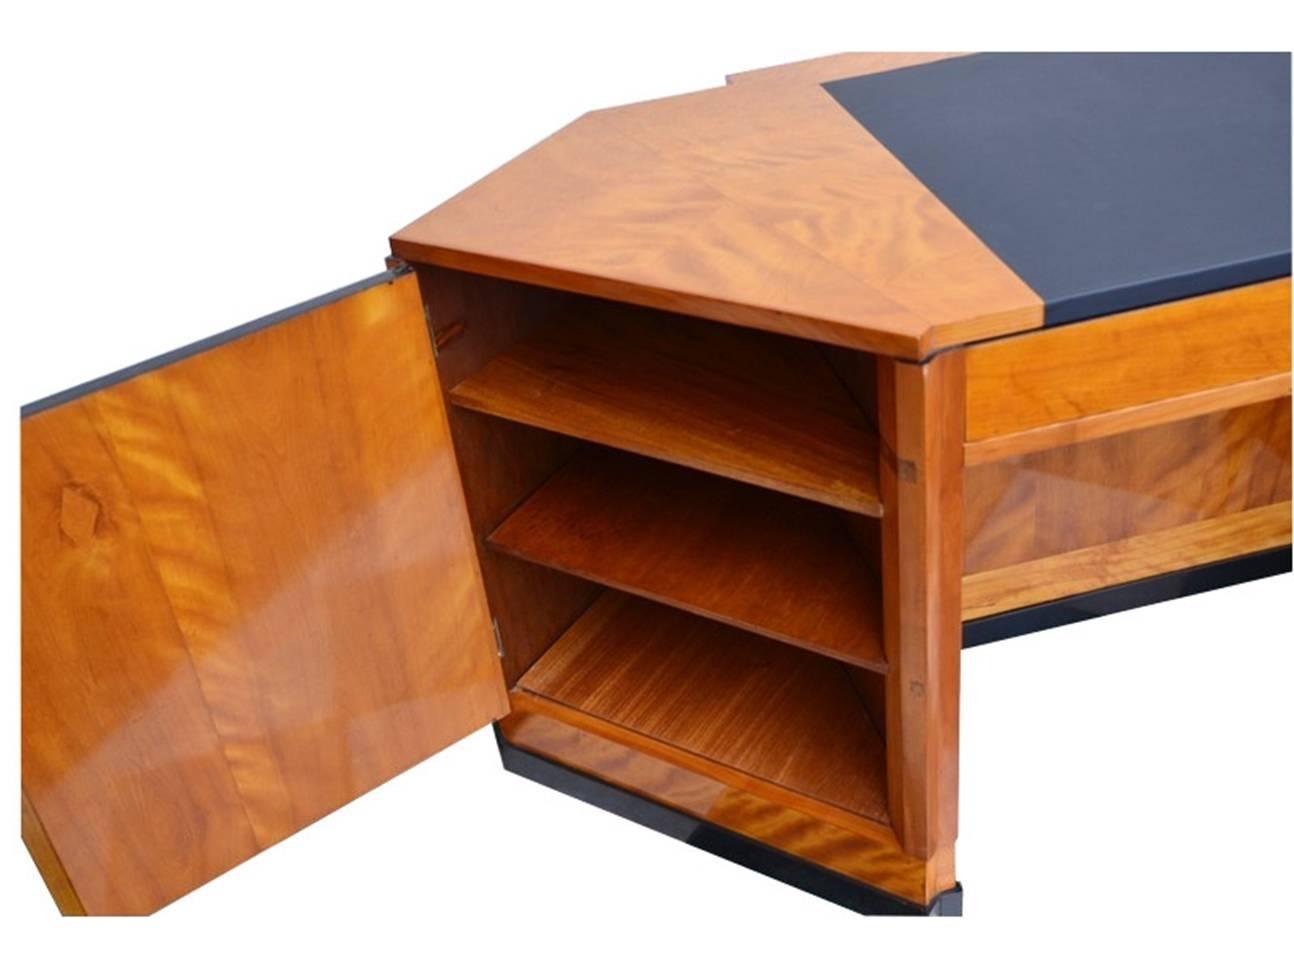 Hexagonal Art Deco Desk Made of Cherry and Mahogany Wood 1